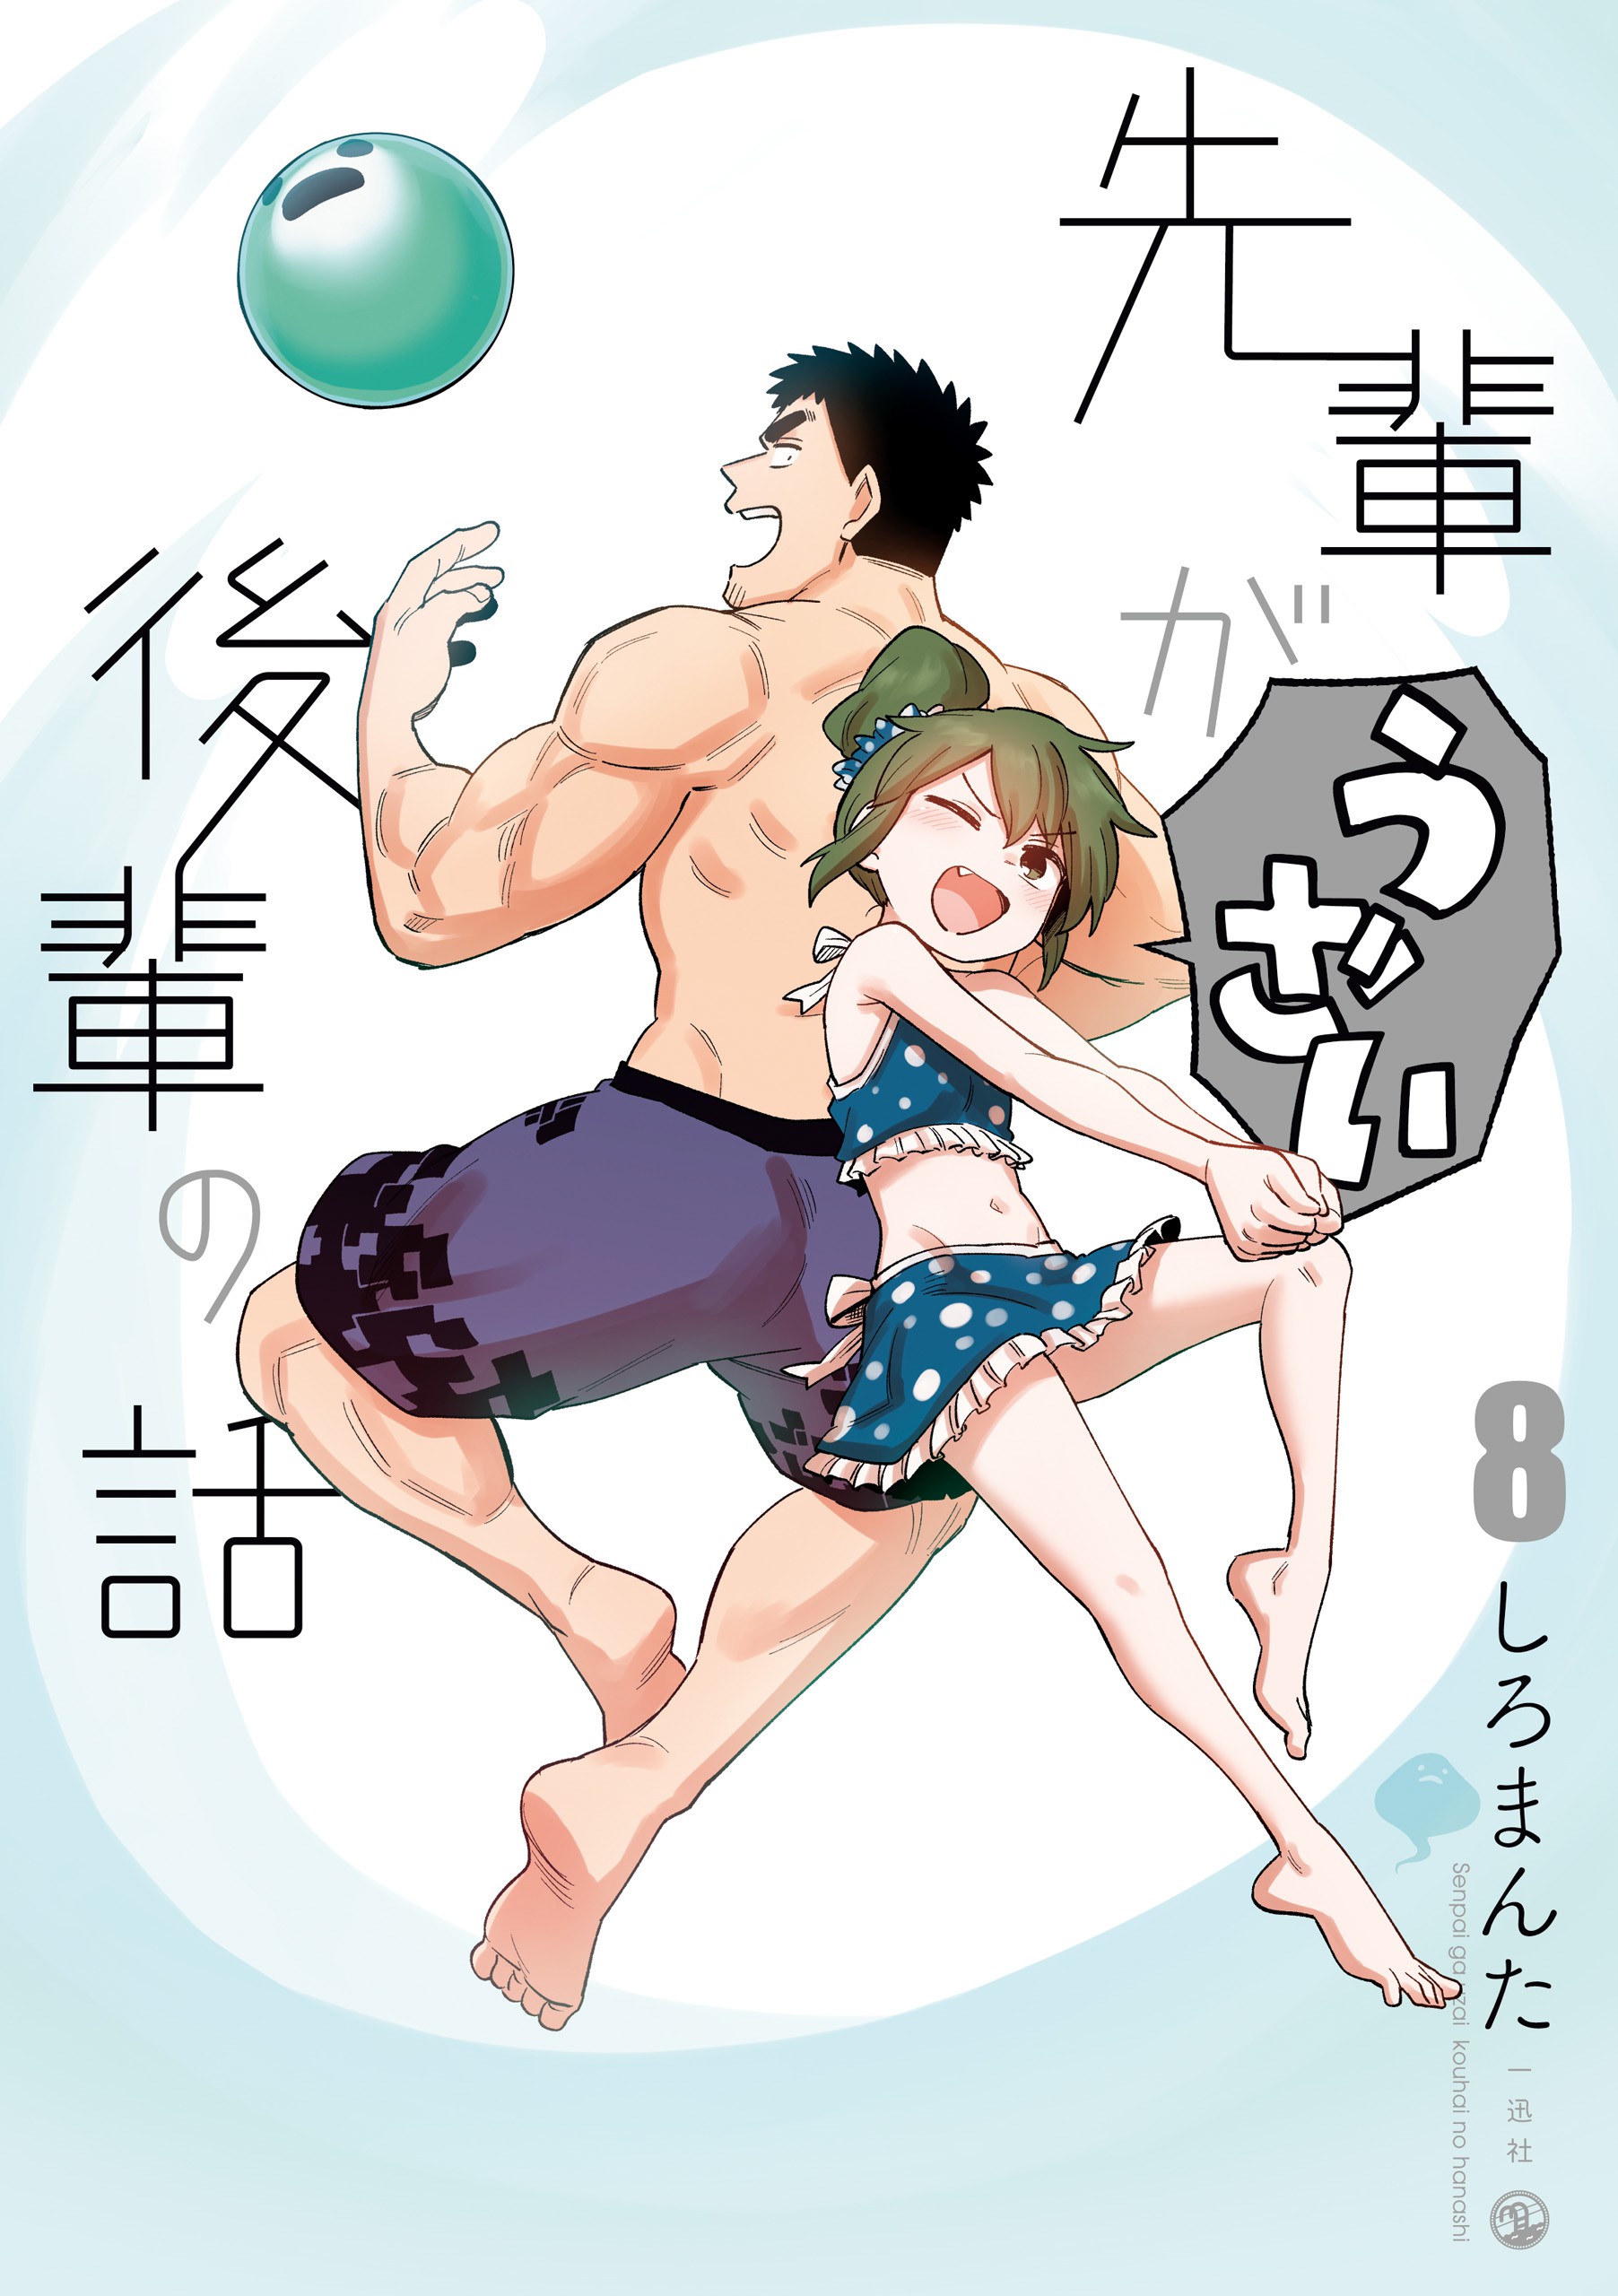 Volume Cover 8 of Annoying Senpai